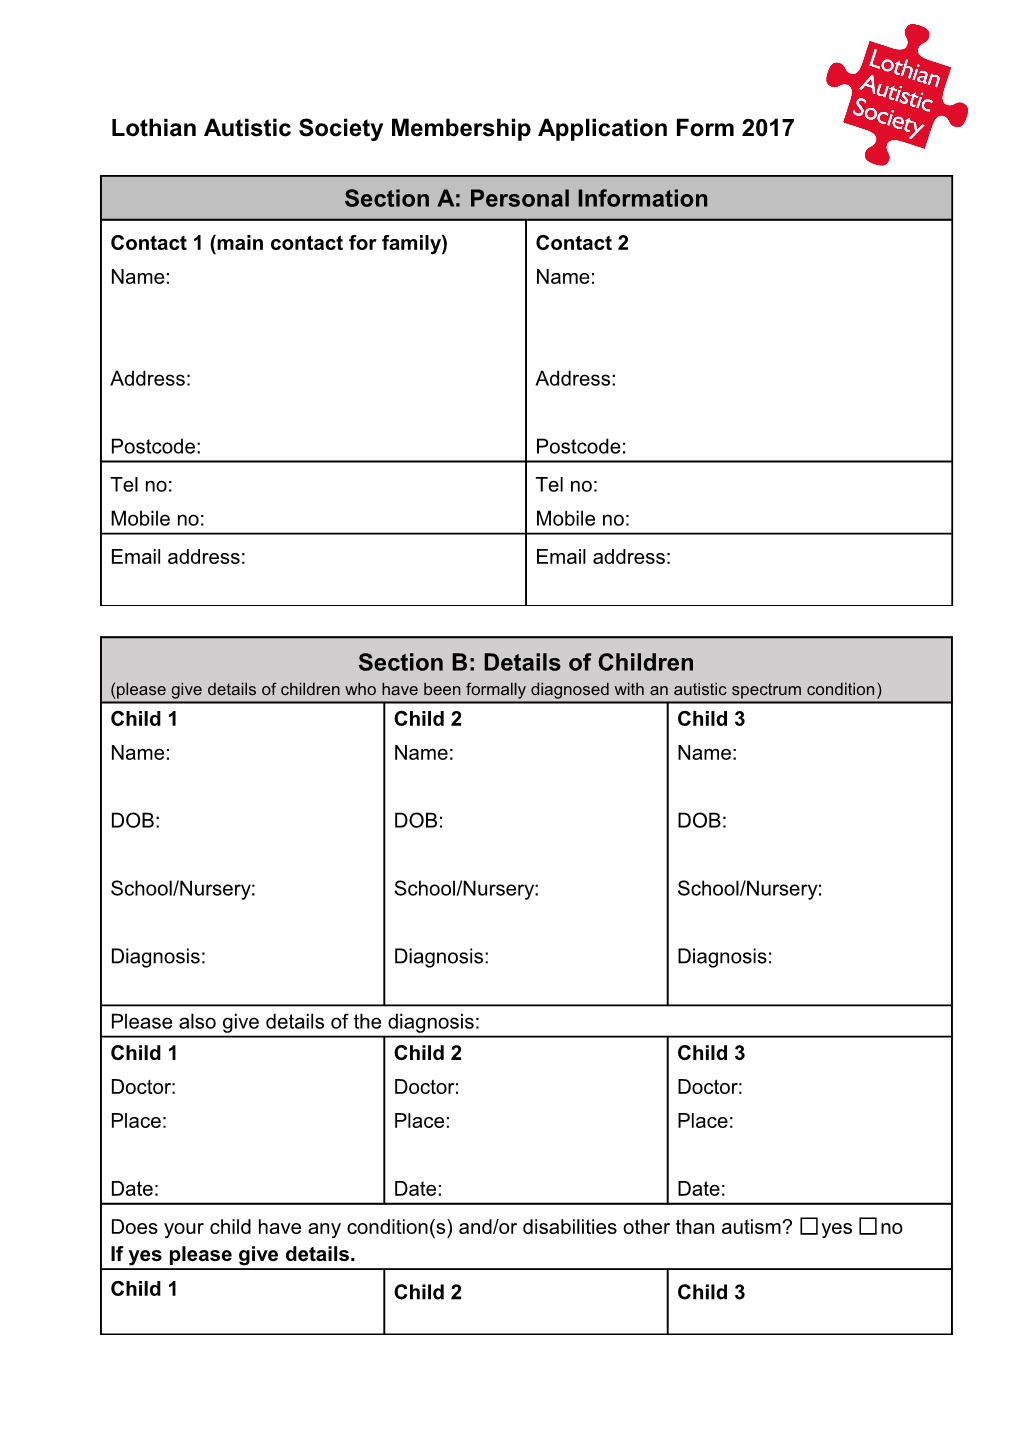 Lothian Autistic Societymembership Application Form 2017